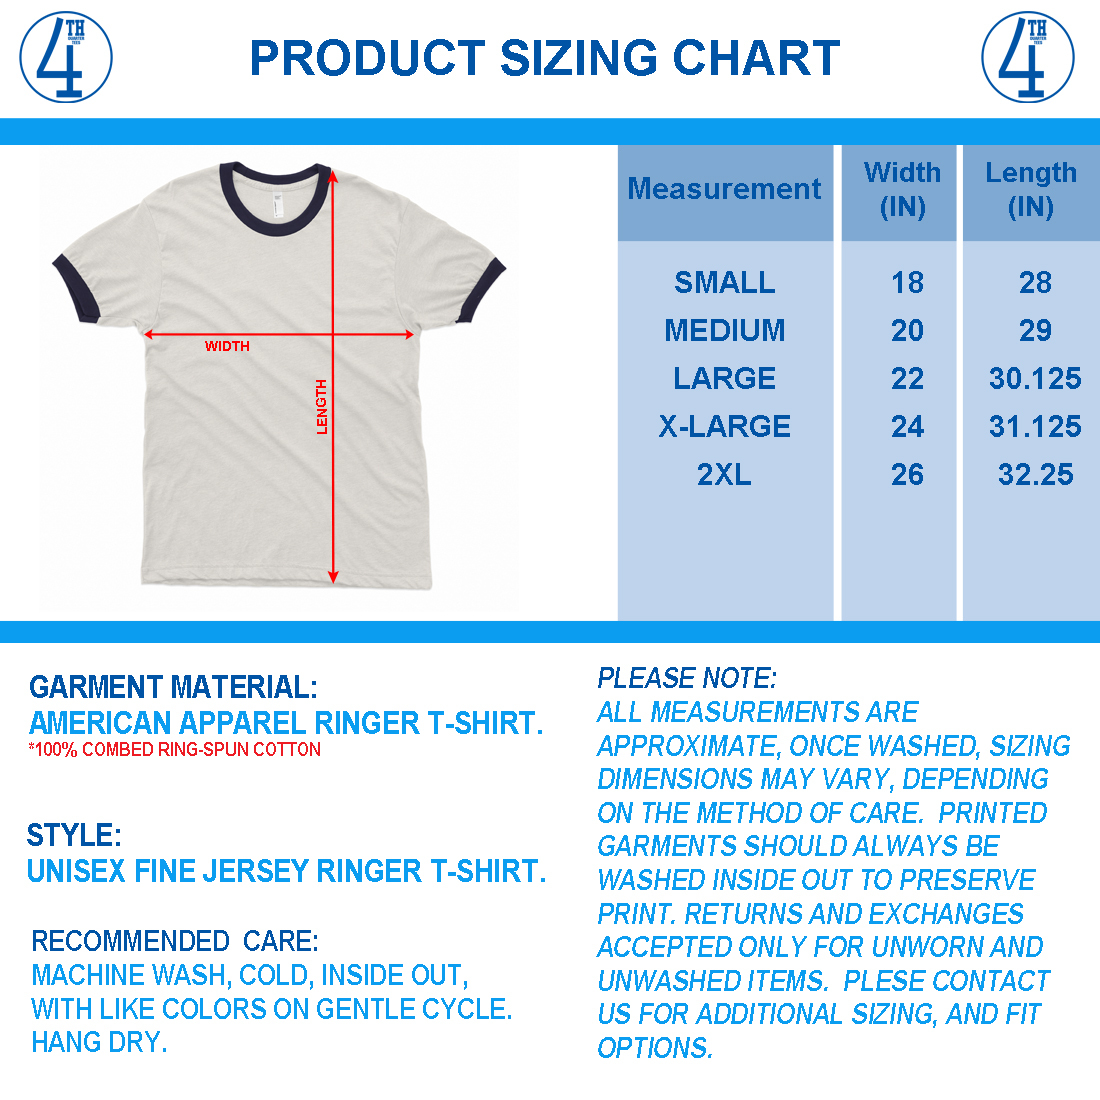 American Apparel Crew Neck Sweatshirt Size Chart